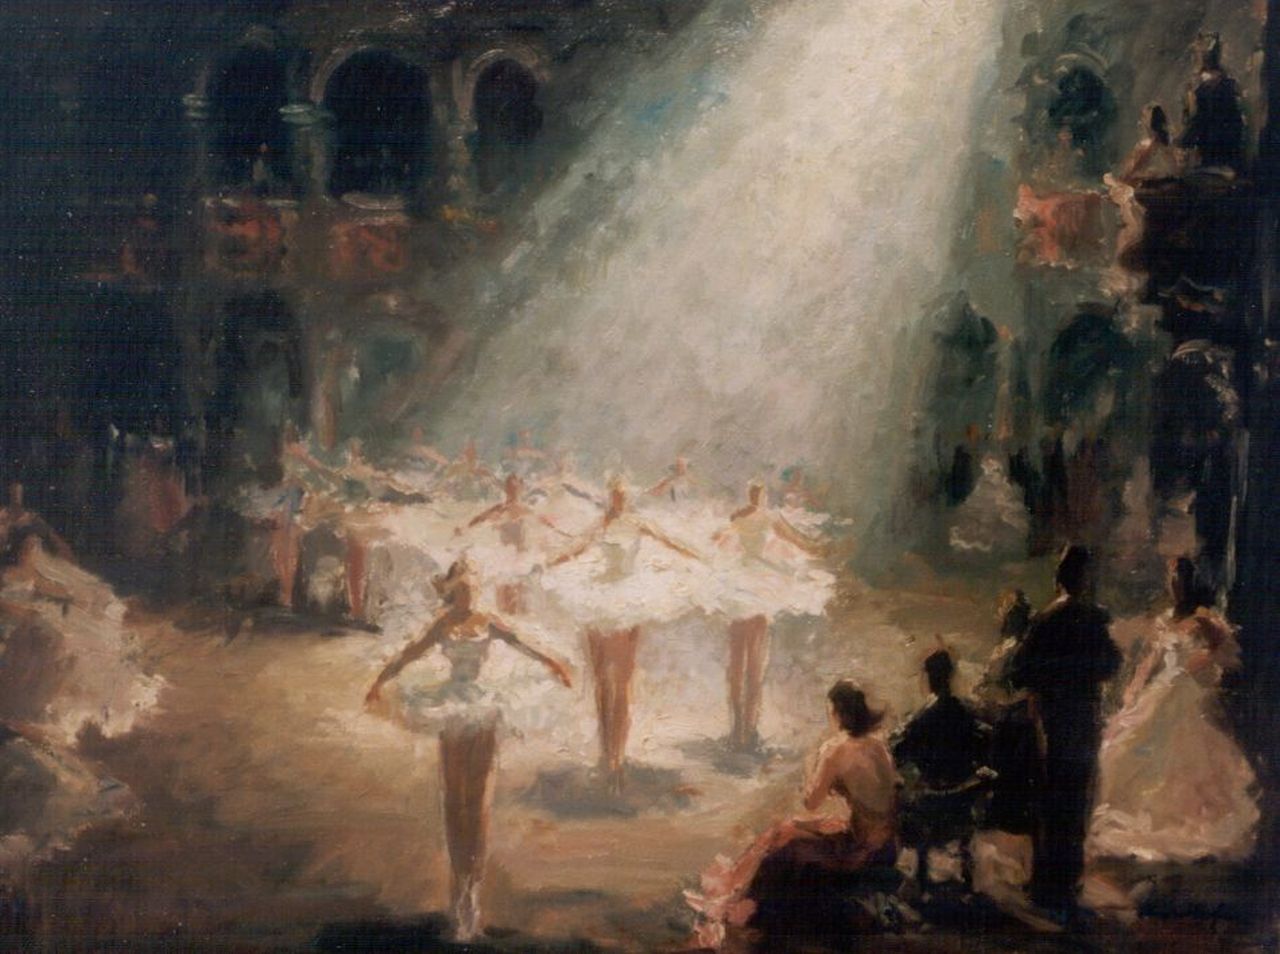 Max Mayrhofer | Ballet dancers, Öl auf Leinwand, 60,2 x 80,2 cm, signed l.r.